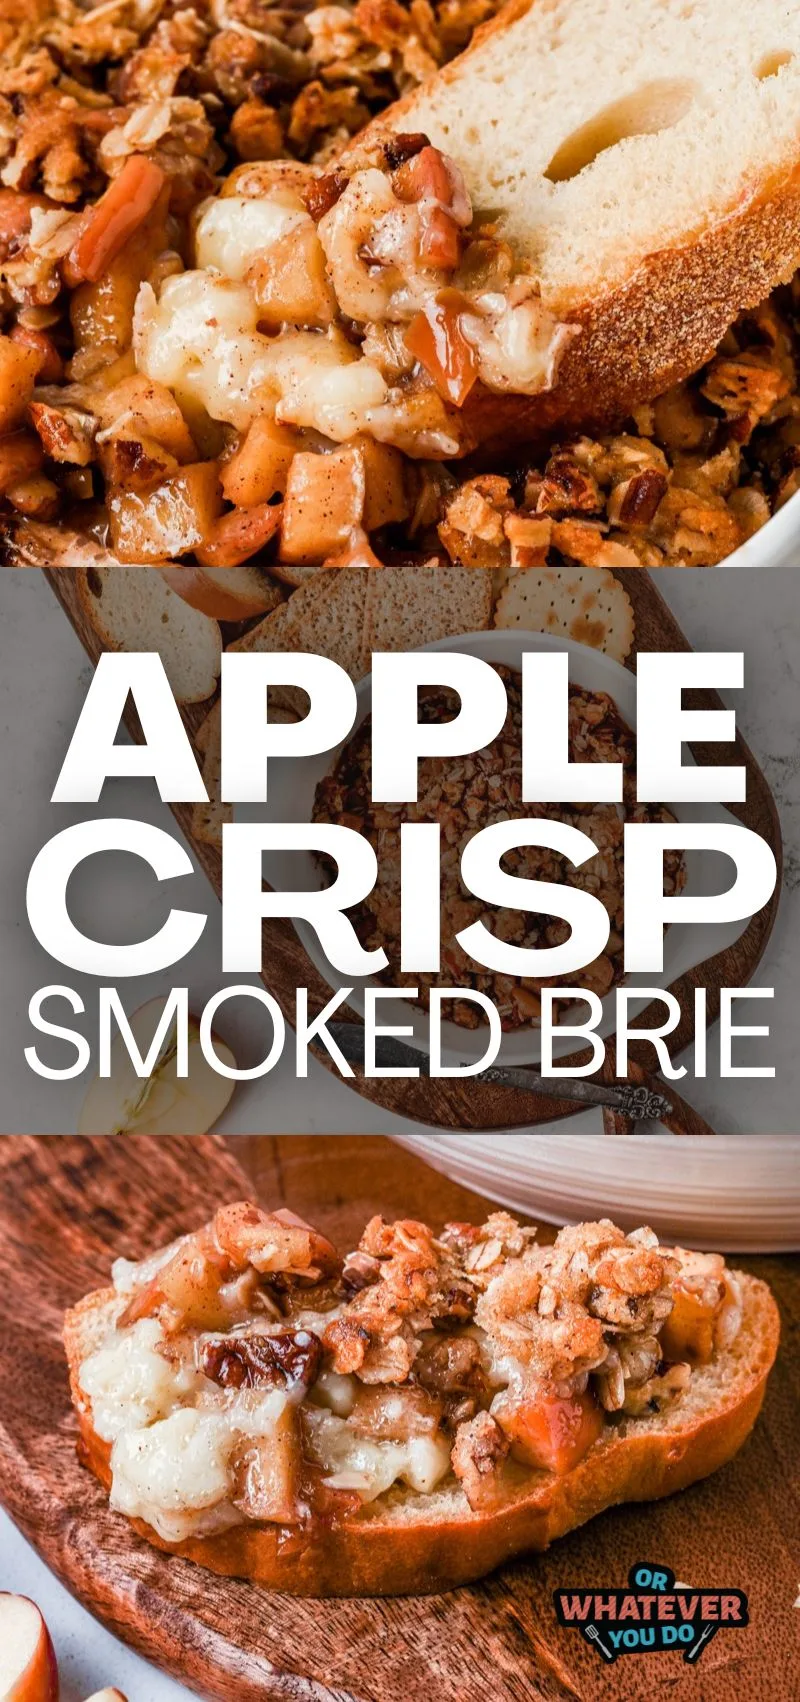 Traeger Apple Crisp Smoked Brie